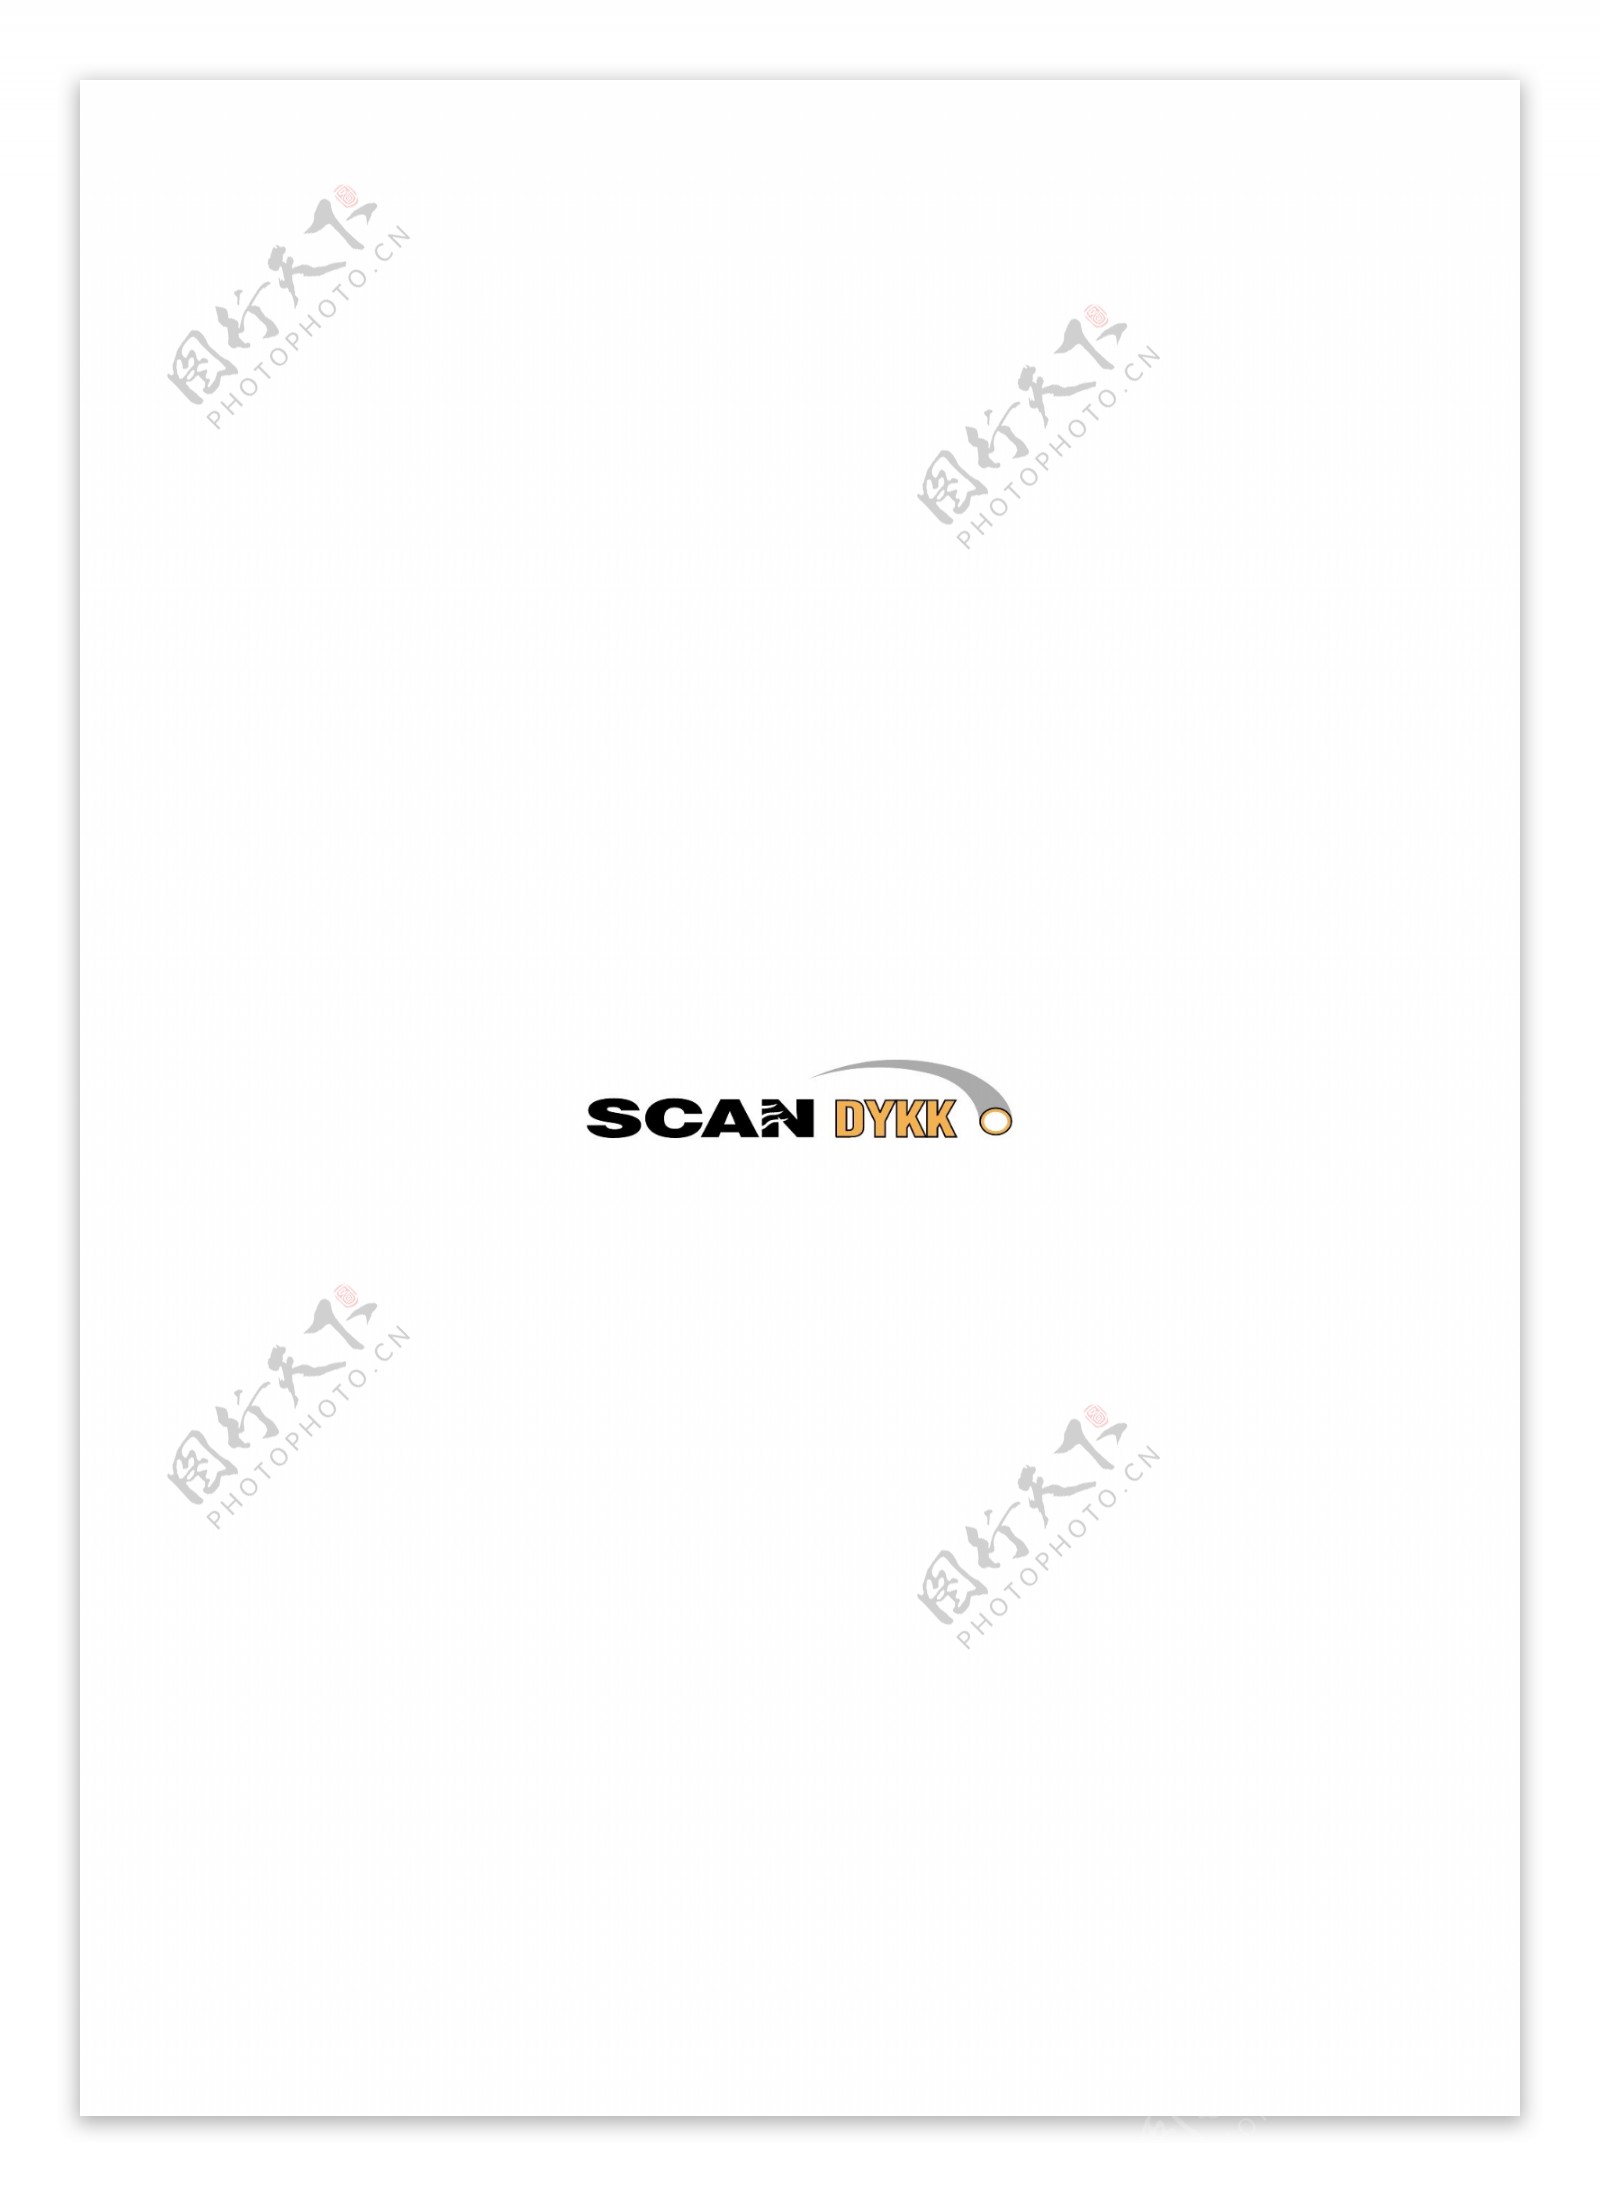 ScanDykkASlogo设计欣赏ScanDykkAS服务公司标志下载标志设计欣赏